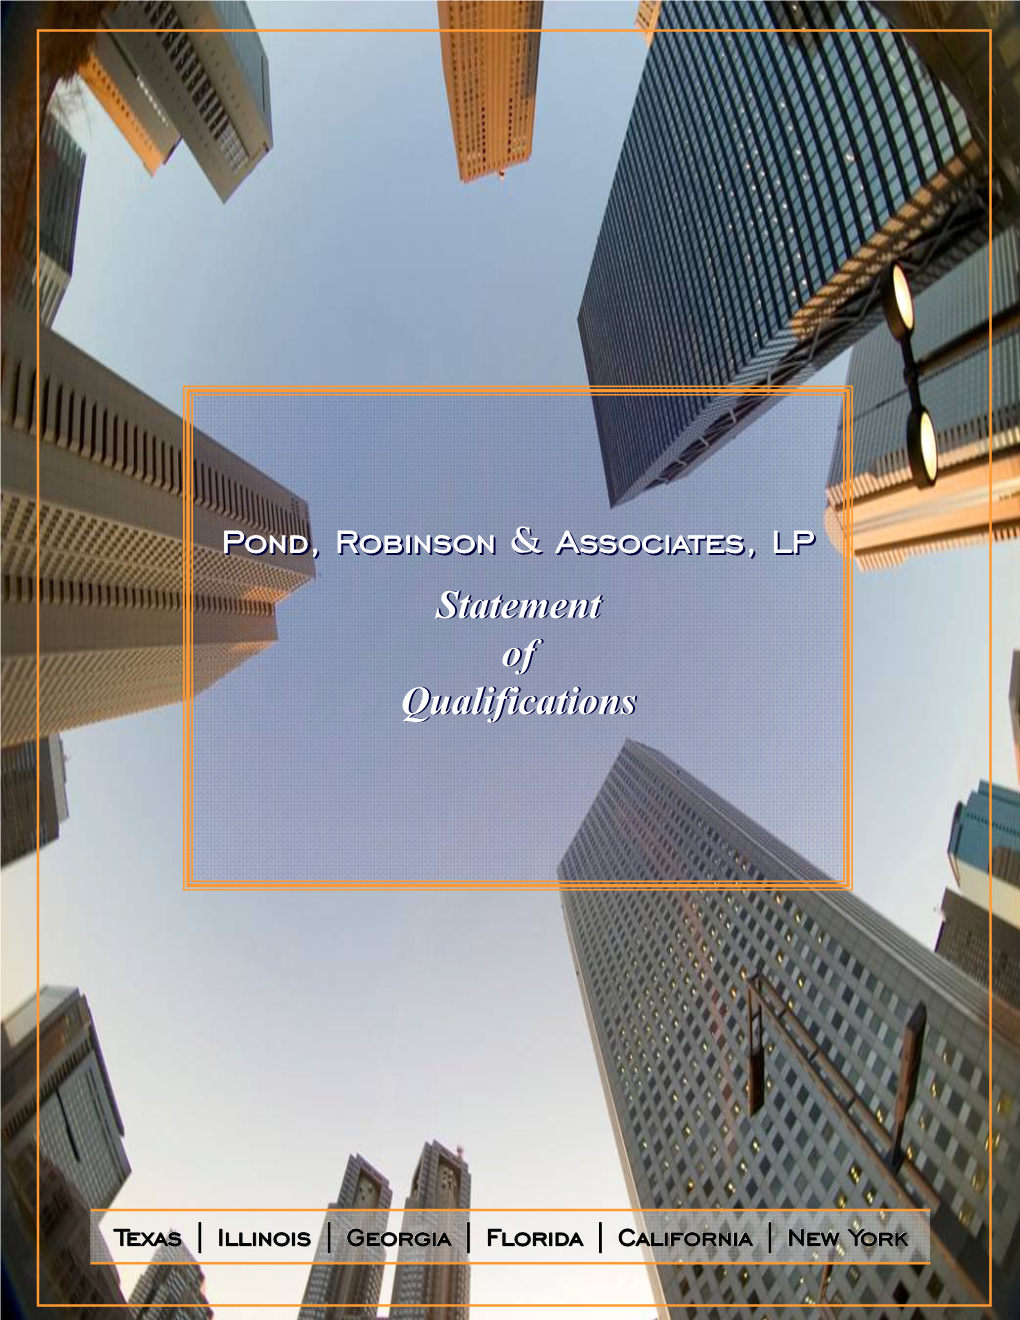 Pond, Robinson & Associates, LP Statement of Qualifications